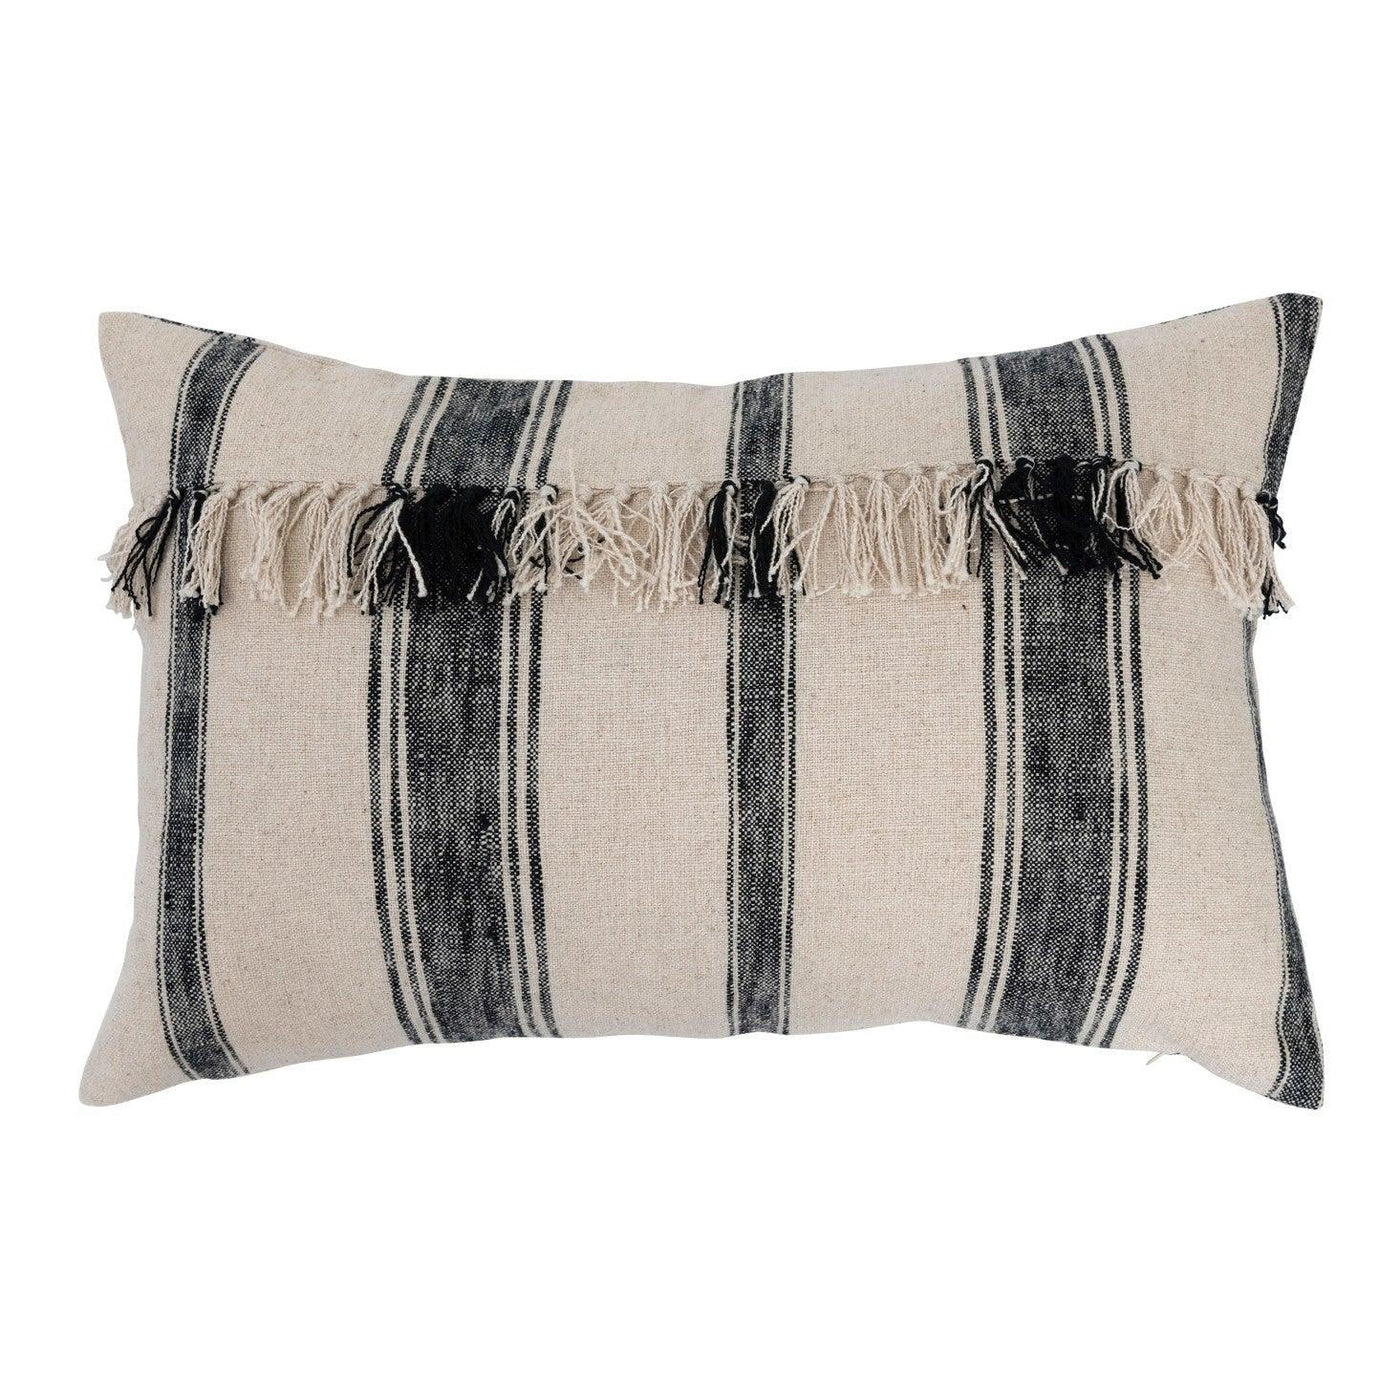 Black & Cream Woven Cotton Lumbar Pillow W/ Fringe - Birch and Bind